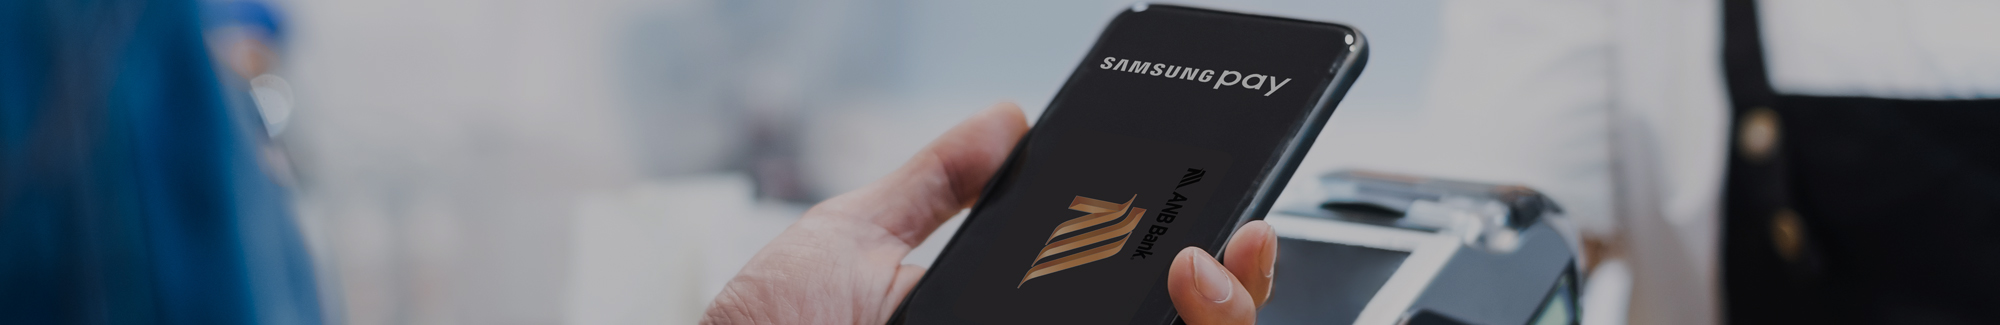 Samsung Pay and card reader